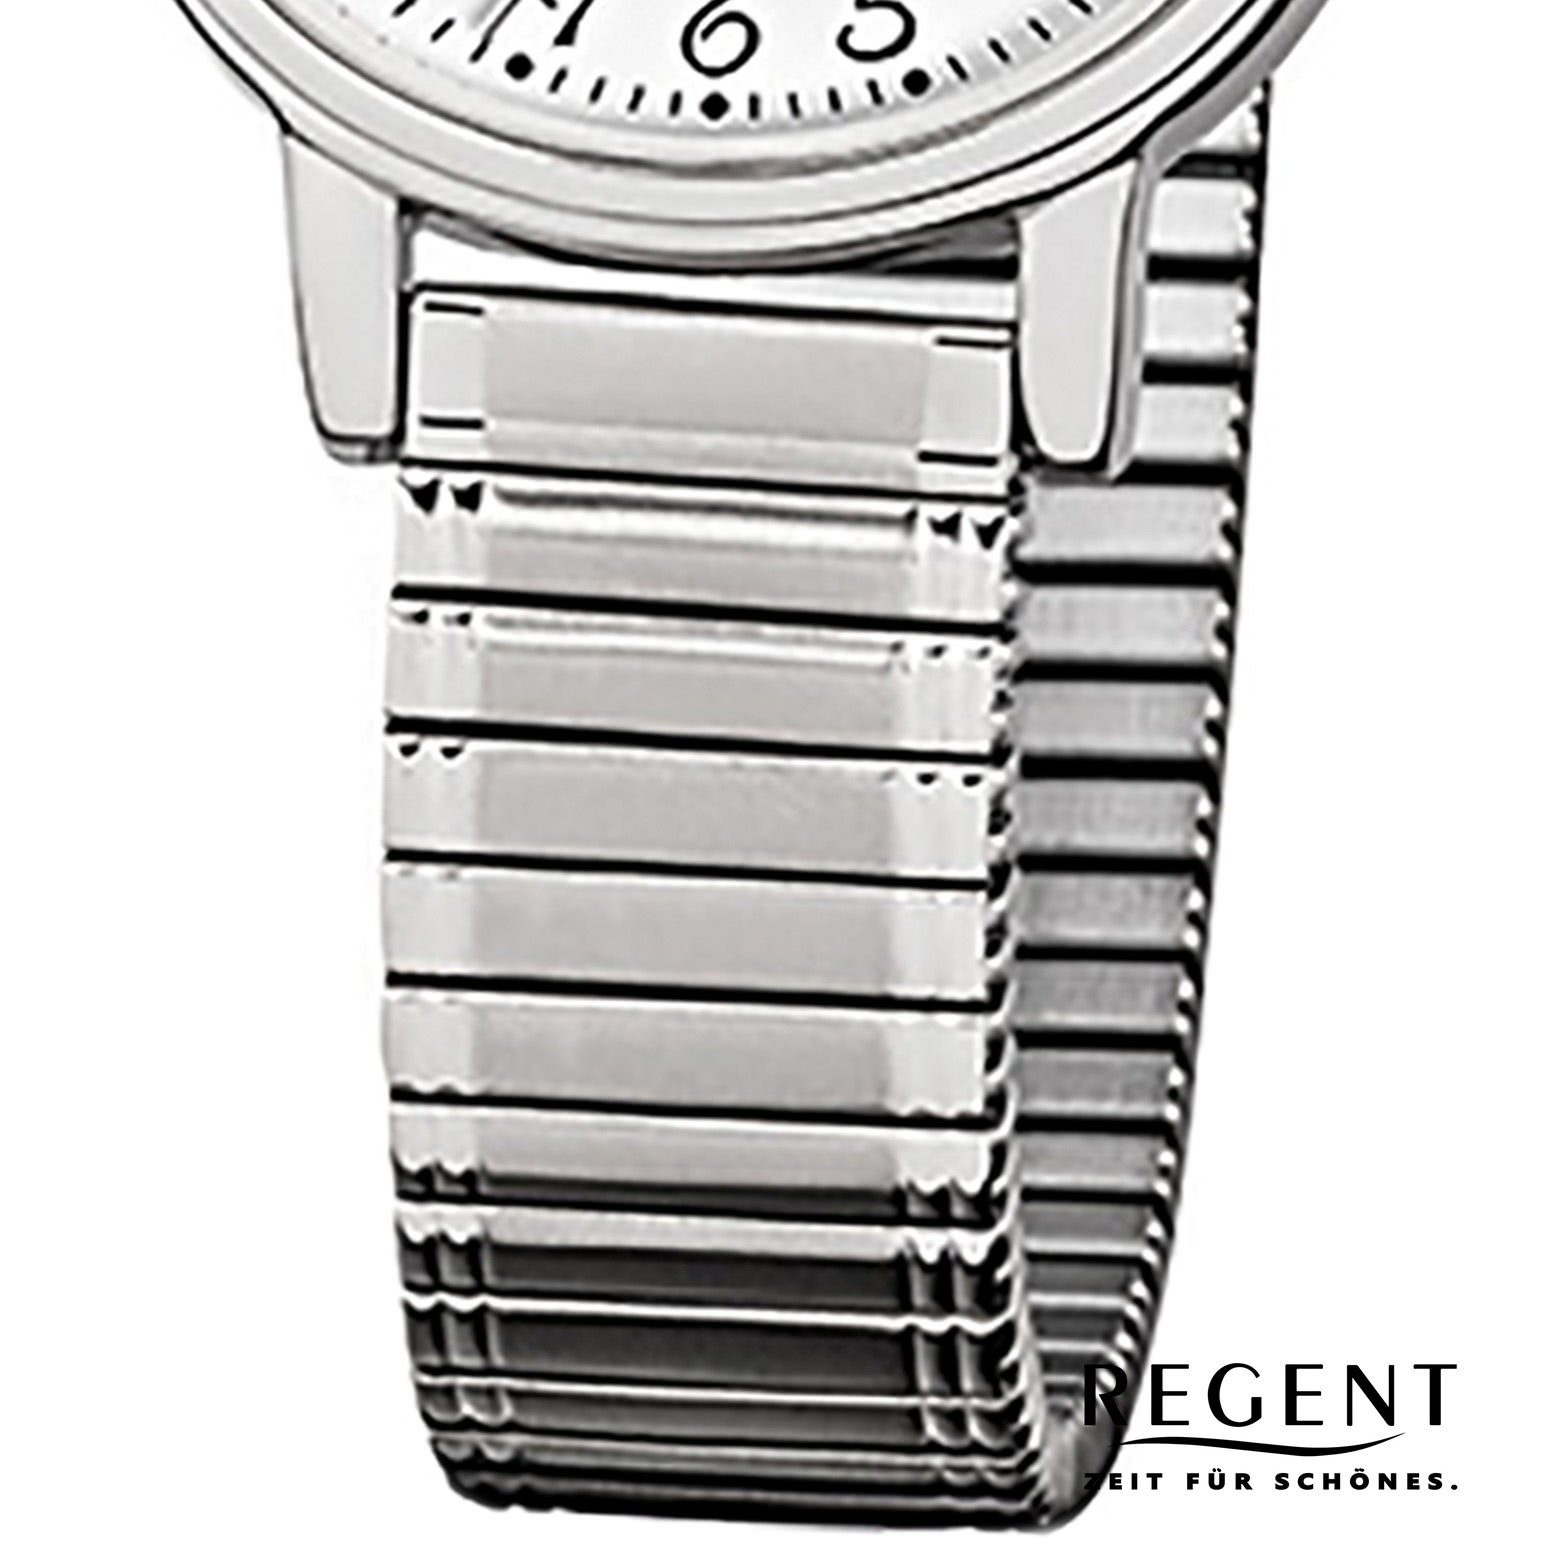 Armbanduhr Regent Analog Damen (ca. 30x25mm), Regent F-891, Edelstahlarmband klein oval, Quarzuhr silber Damen-Armbanduhr